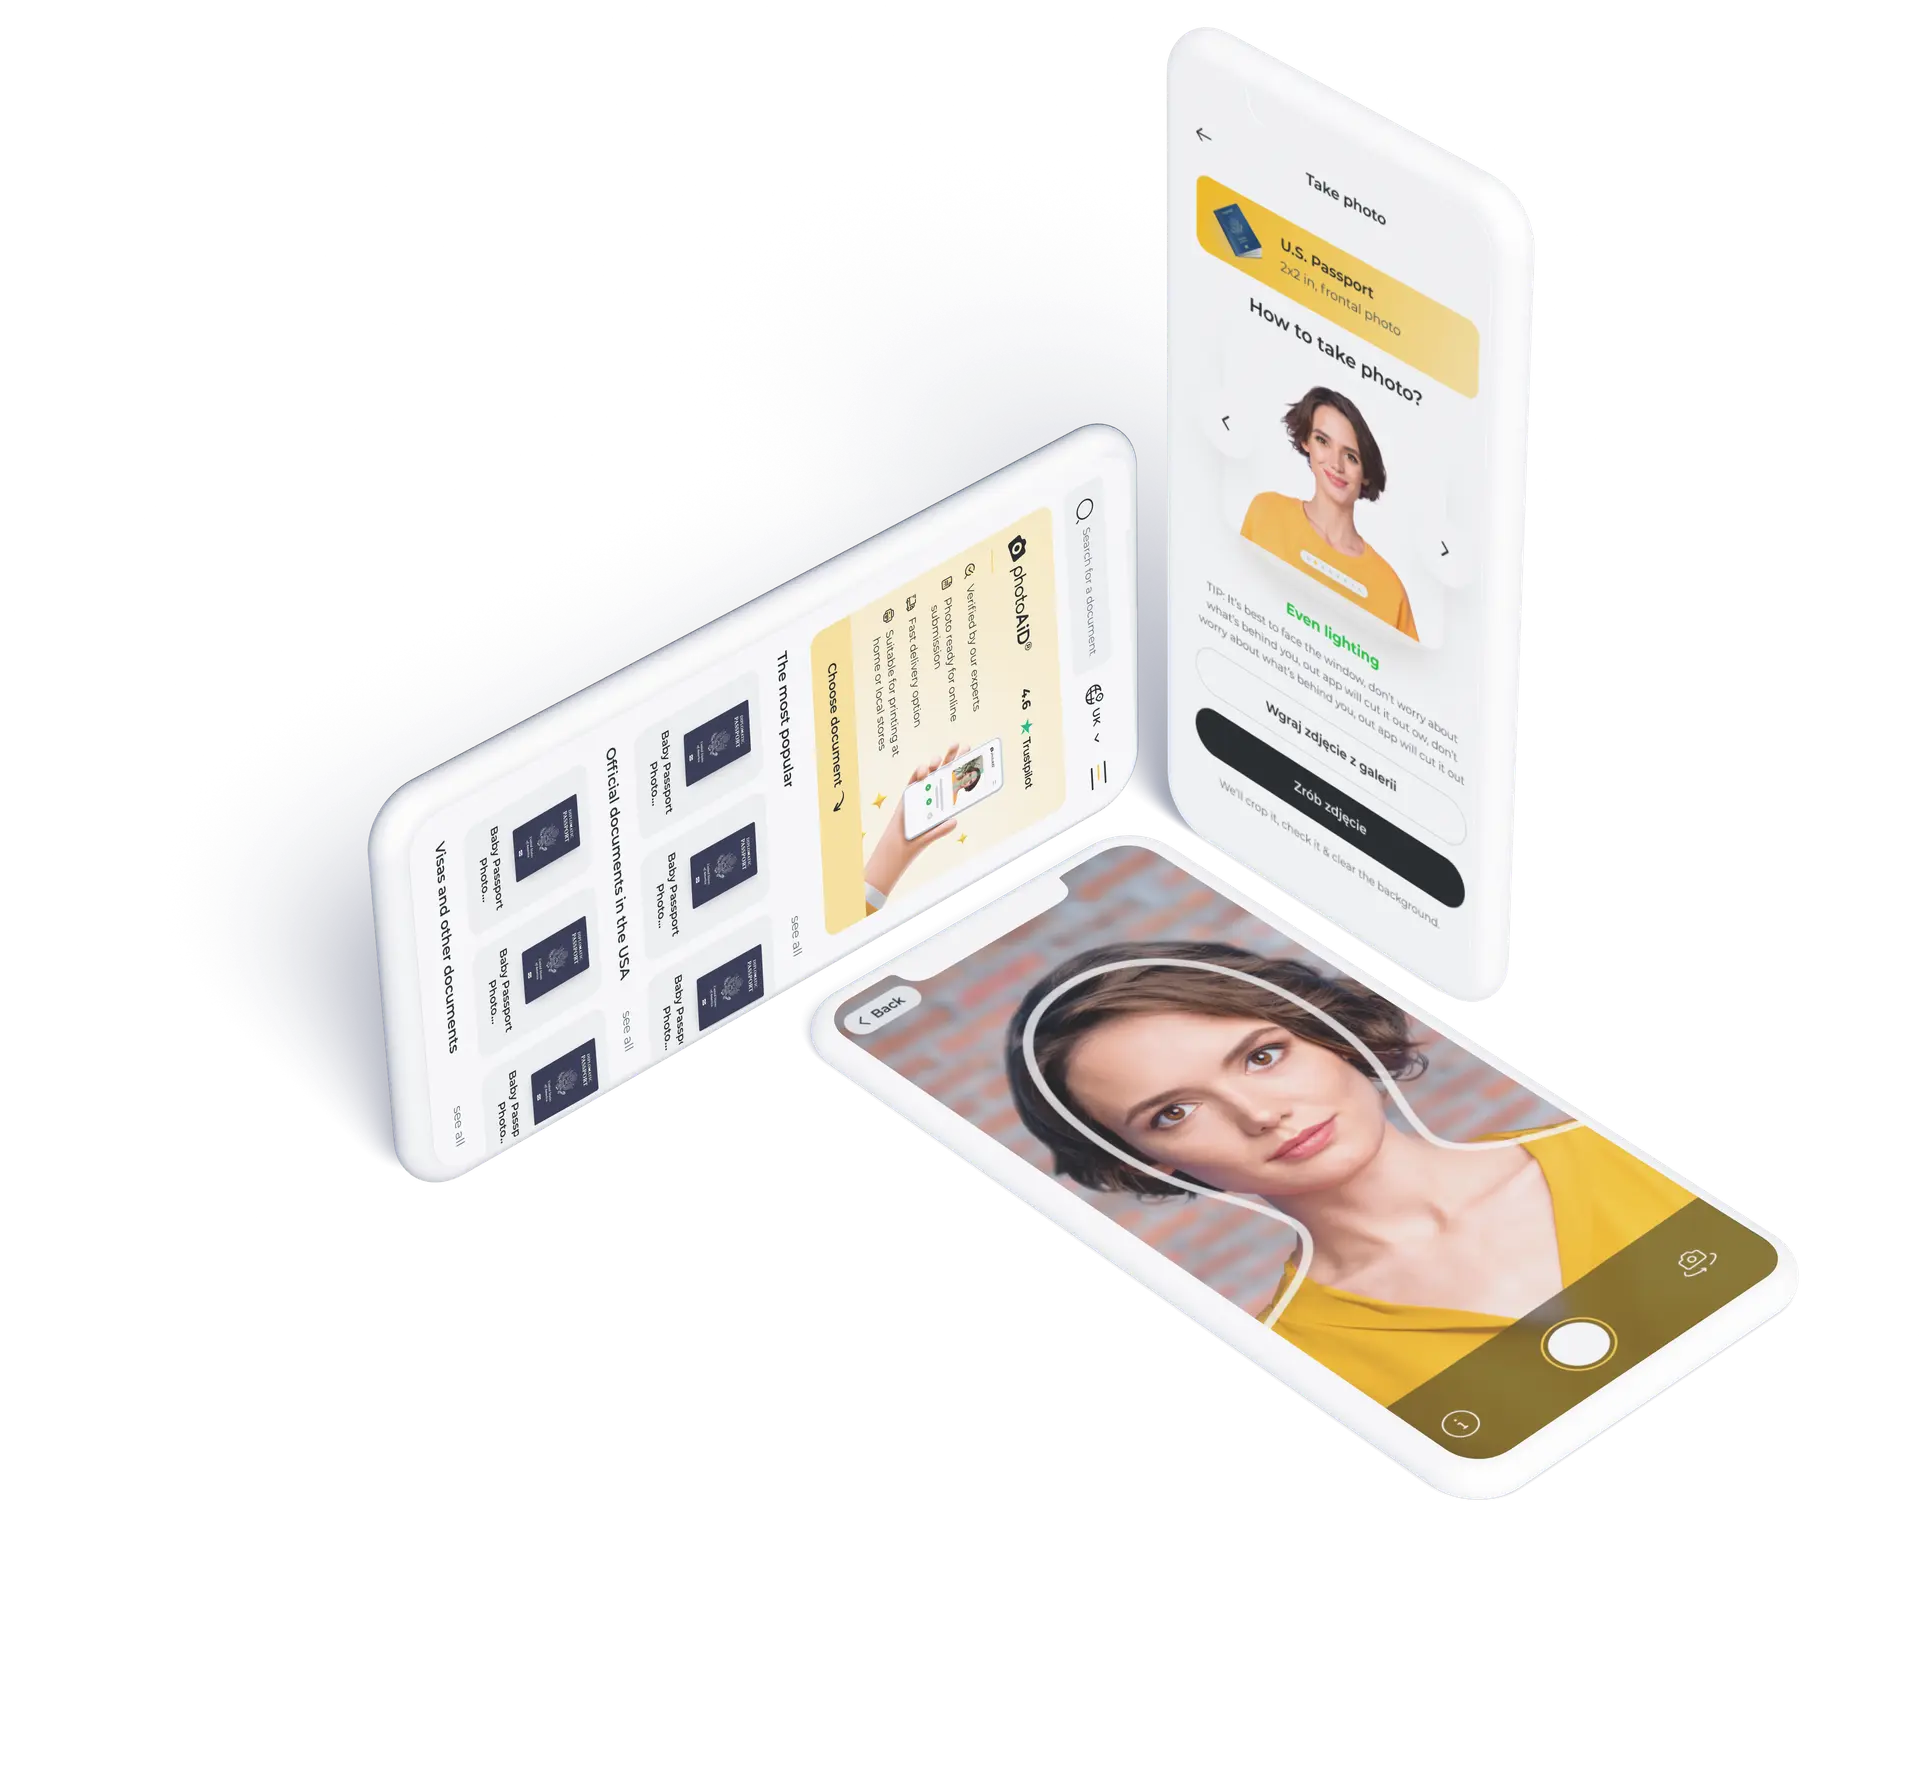 Passport photo app on phone